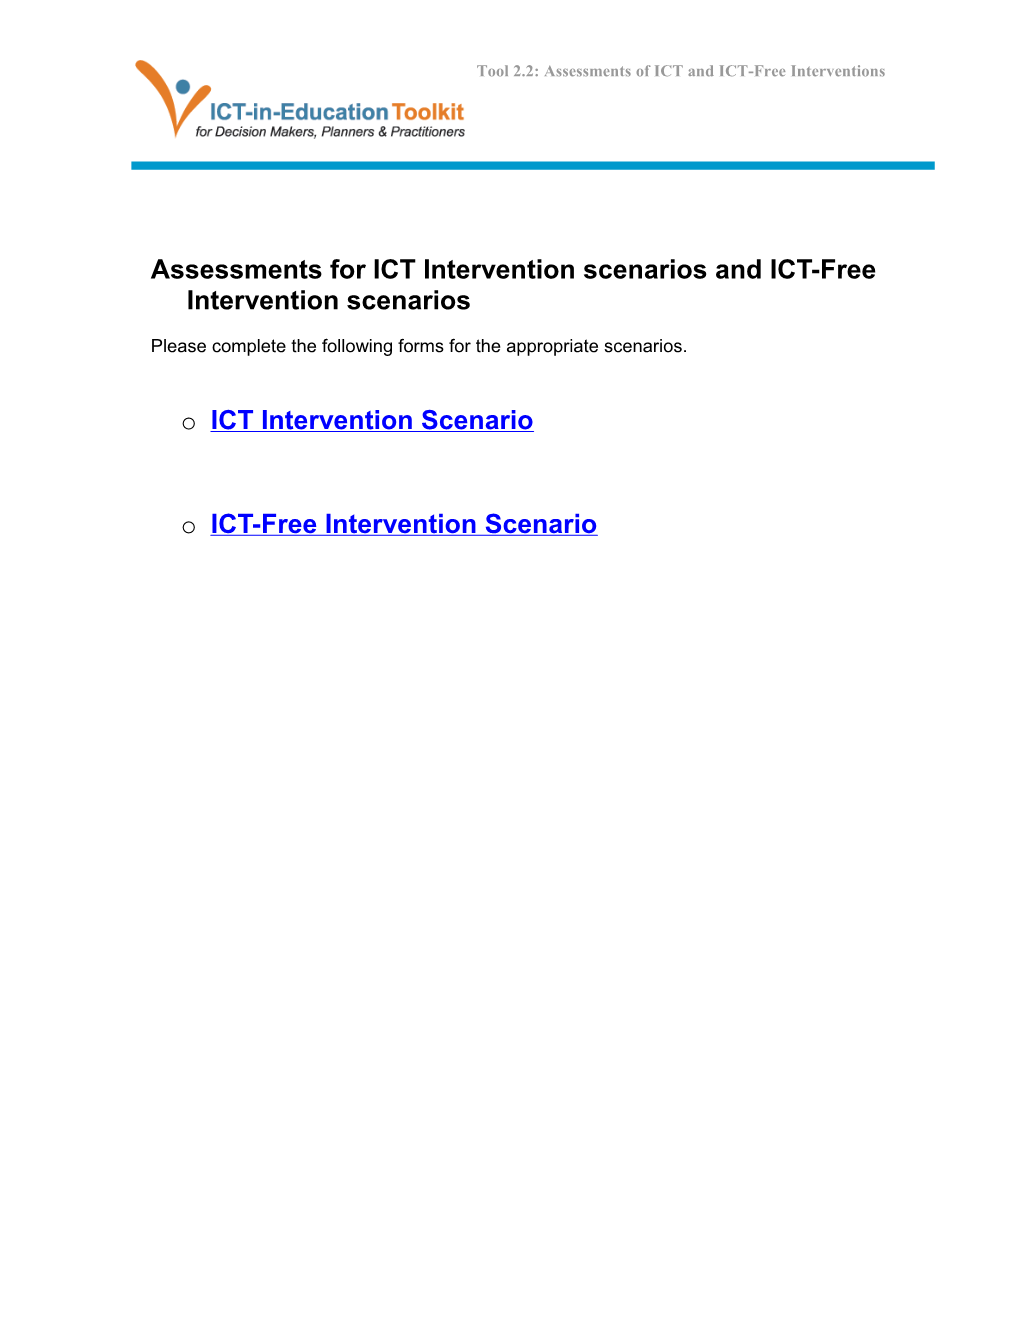 Description of ICT Intervention Scenario